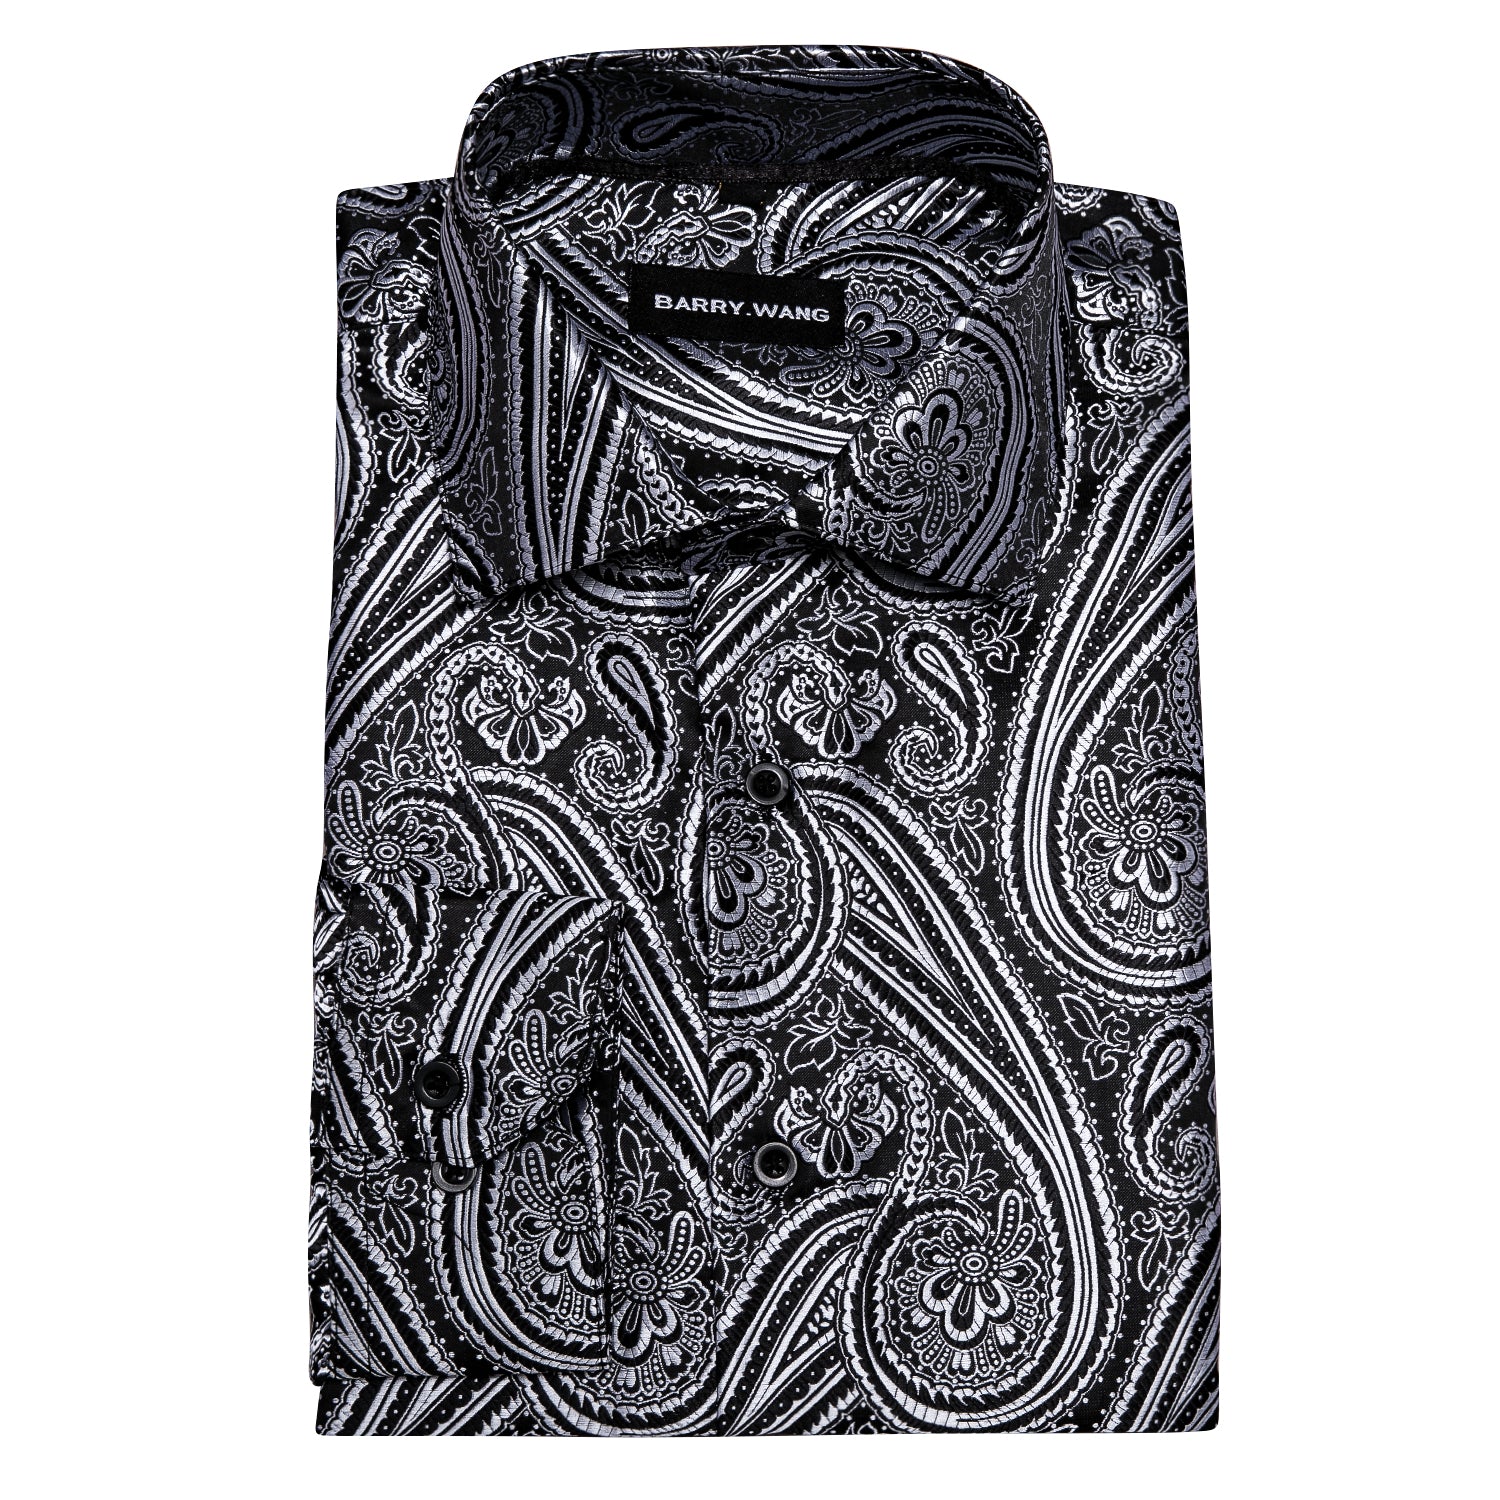 Barry.wang Grey Silk Print Paisley Tribal Long Sleeve Daily Slim Fit Men's Shirt